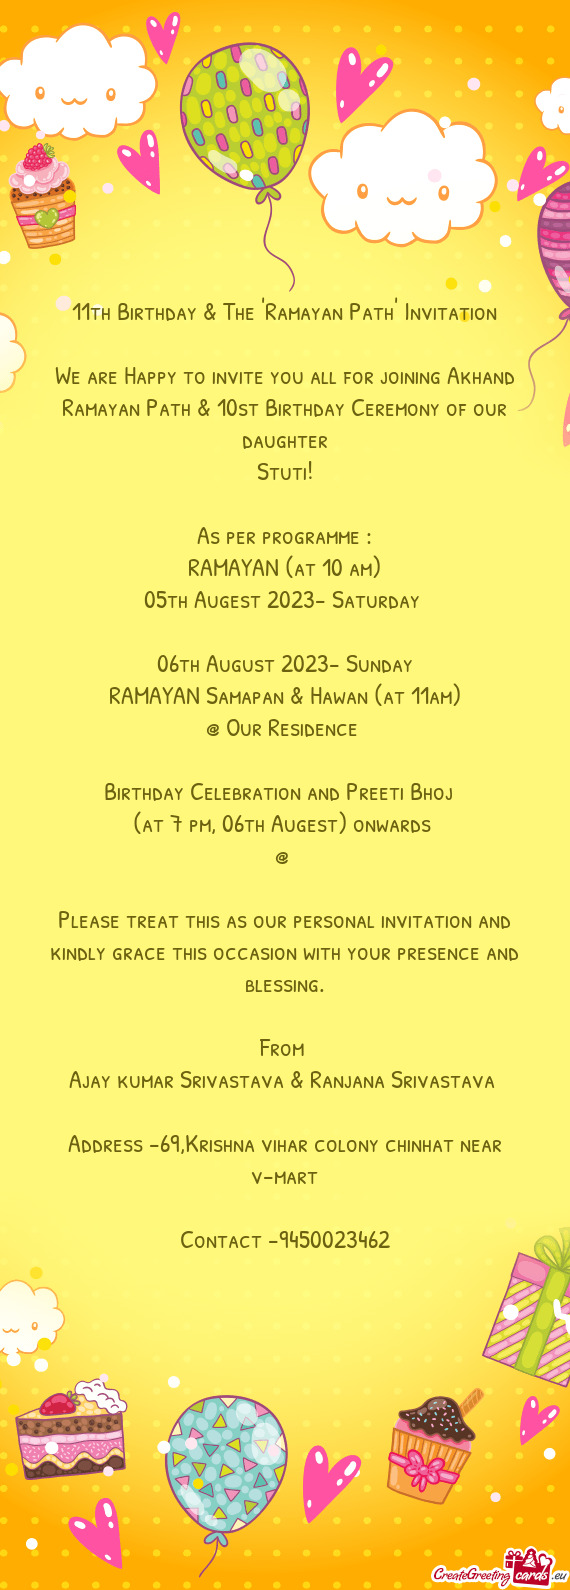 11th Birthday & The "Ramayan Path" Invitation